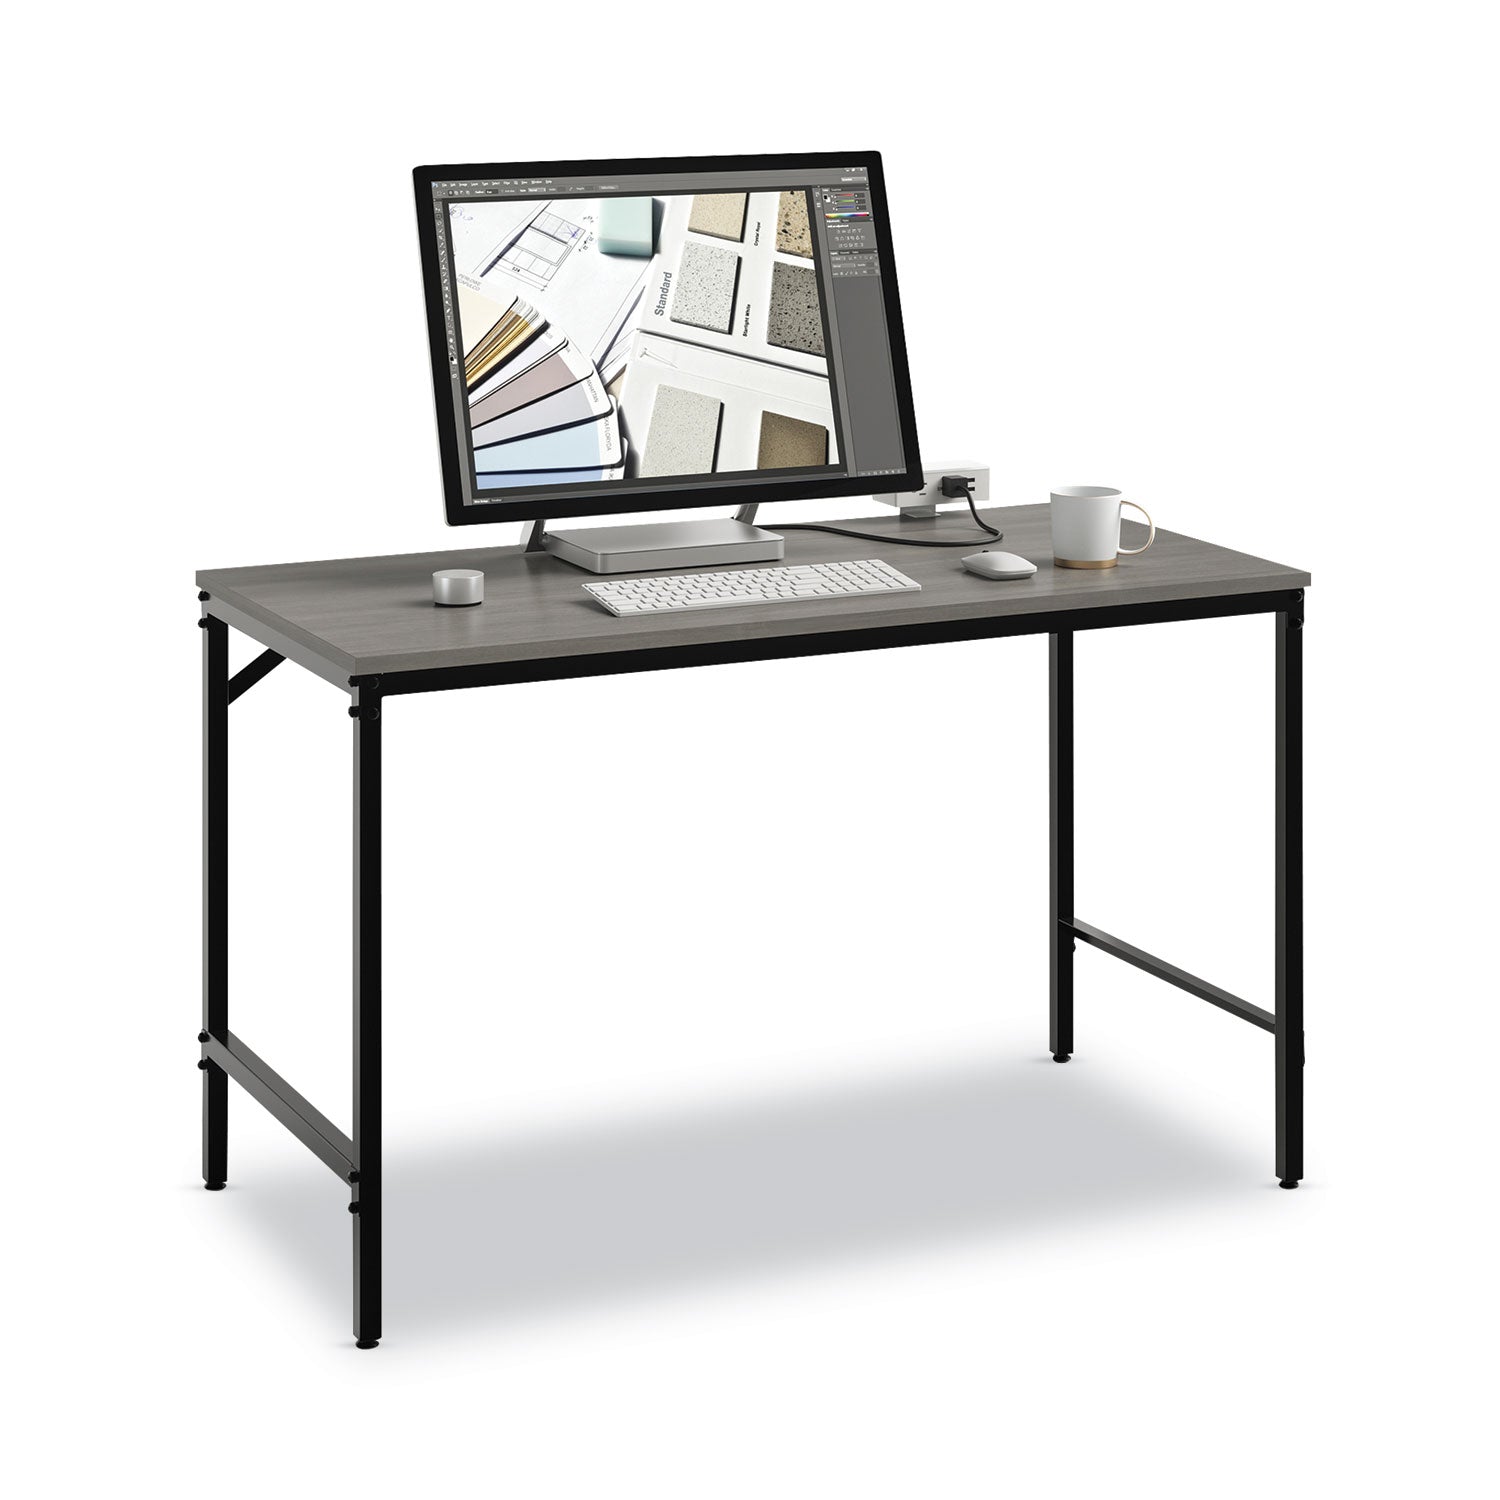 simple-work-desk-455-x-235-x-295-gray_saf5272blgr - 3